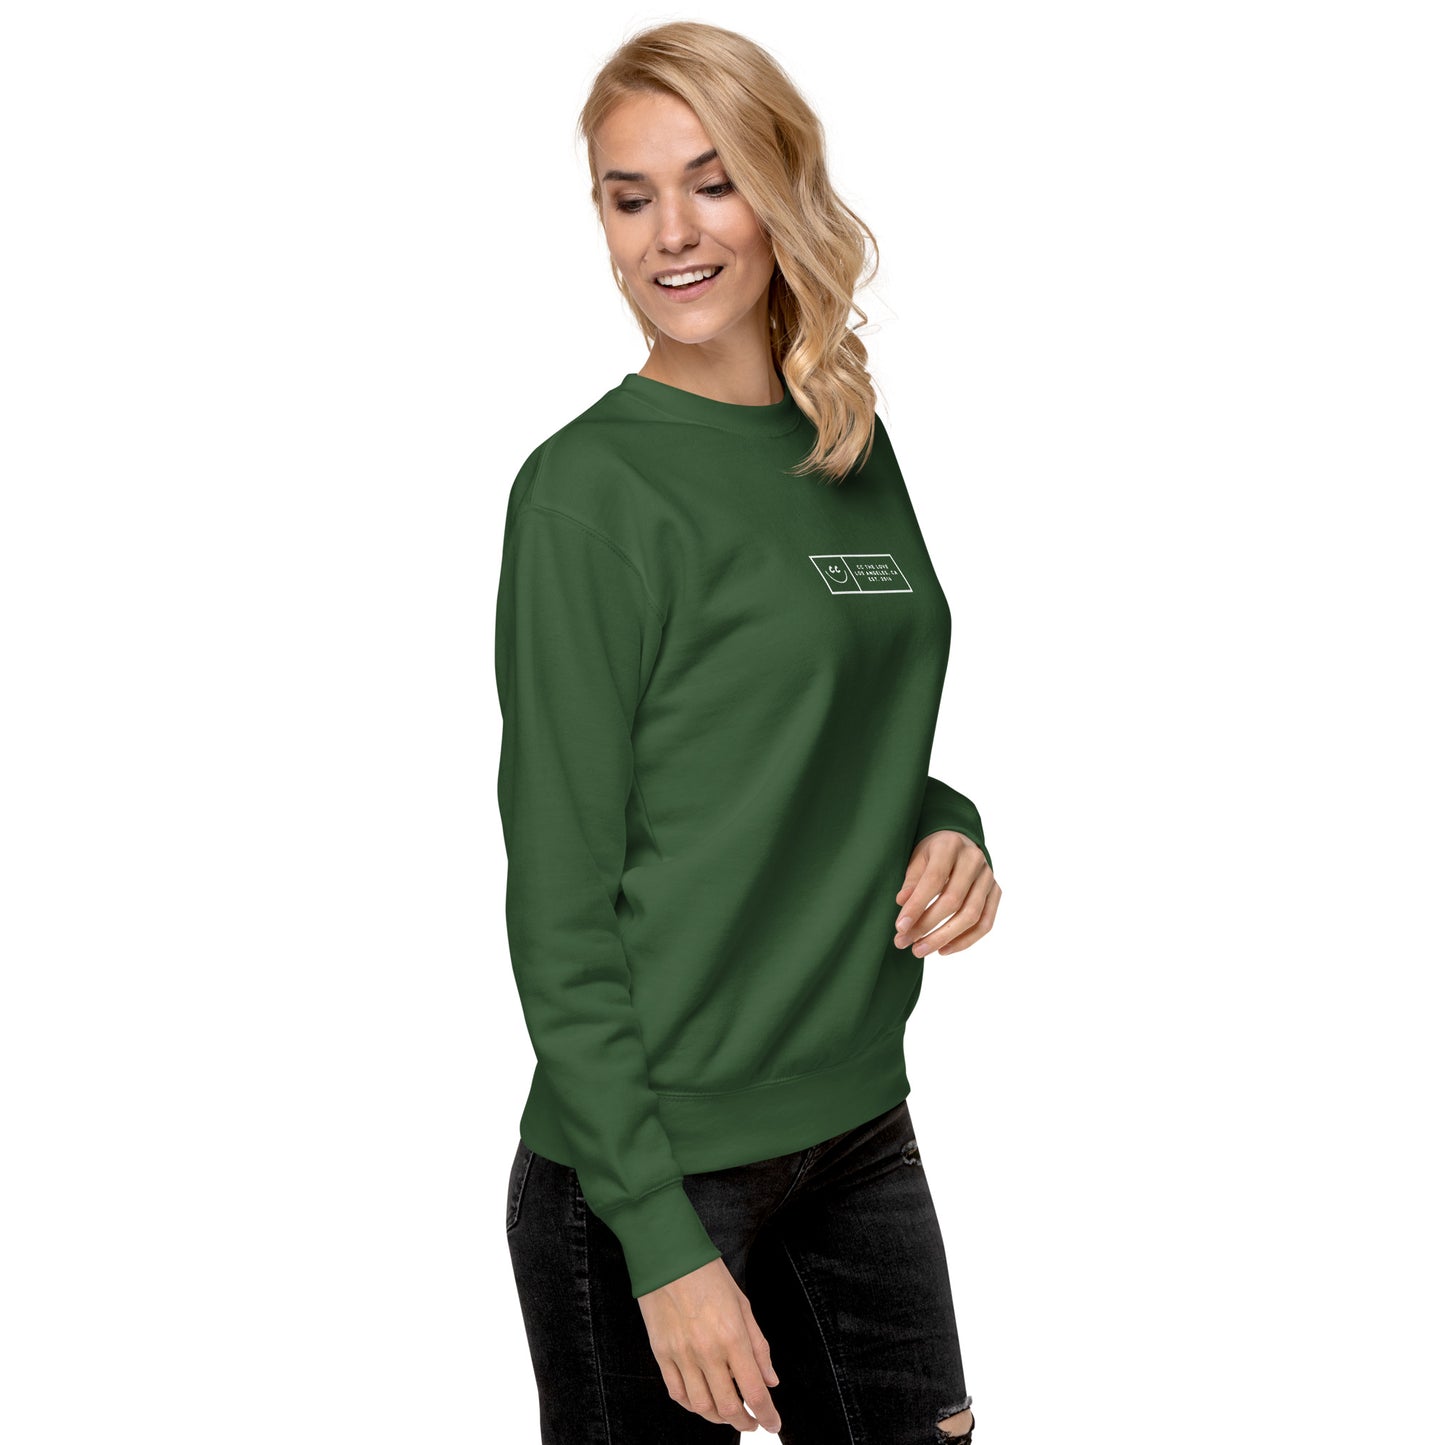 Boxed Smile Fleece in Forest Green - Sweatshirt